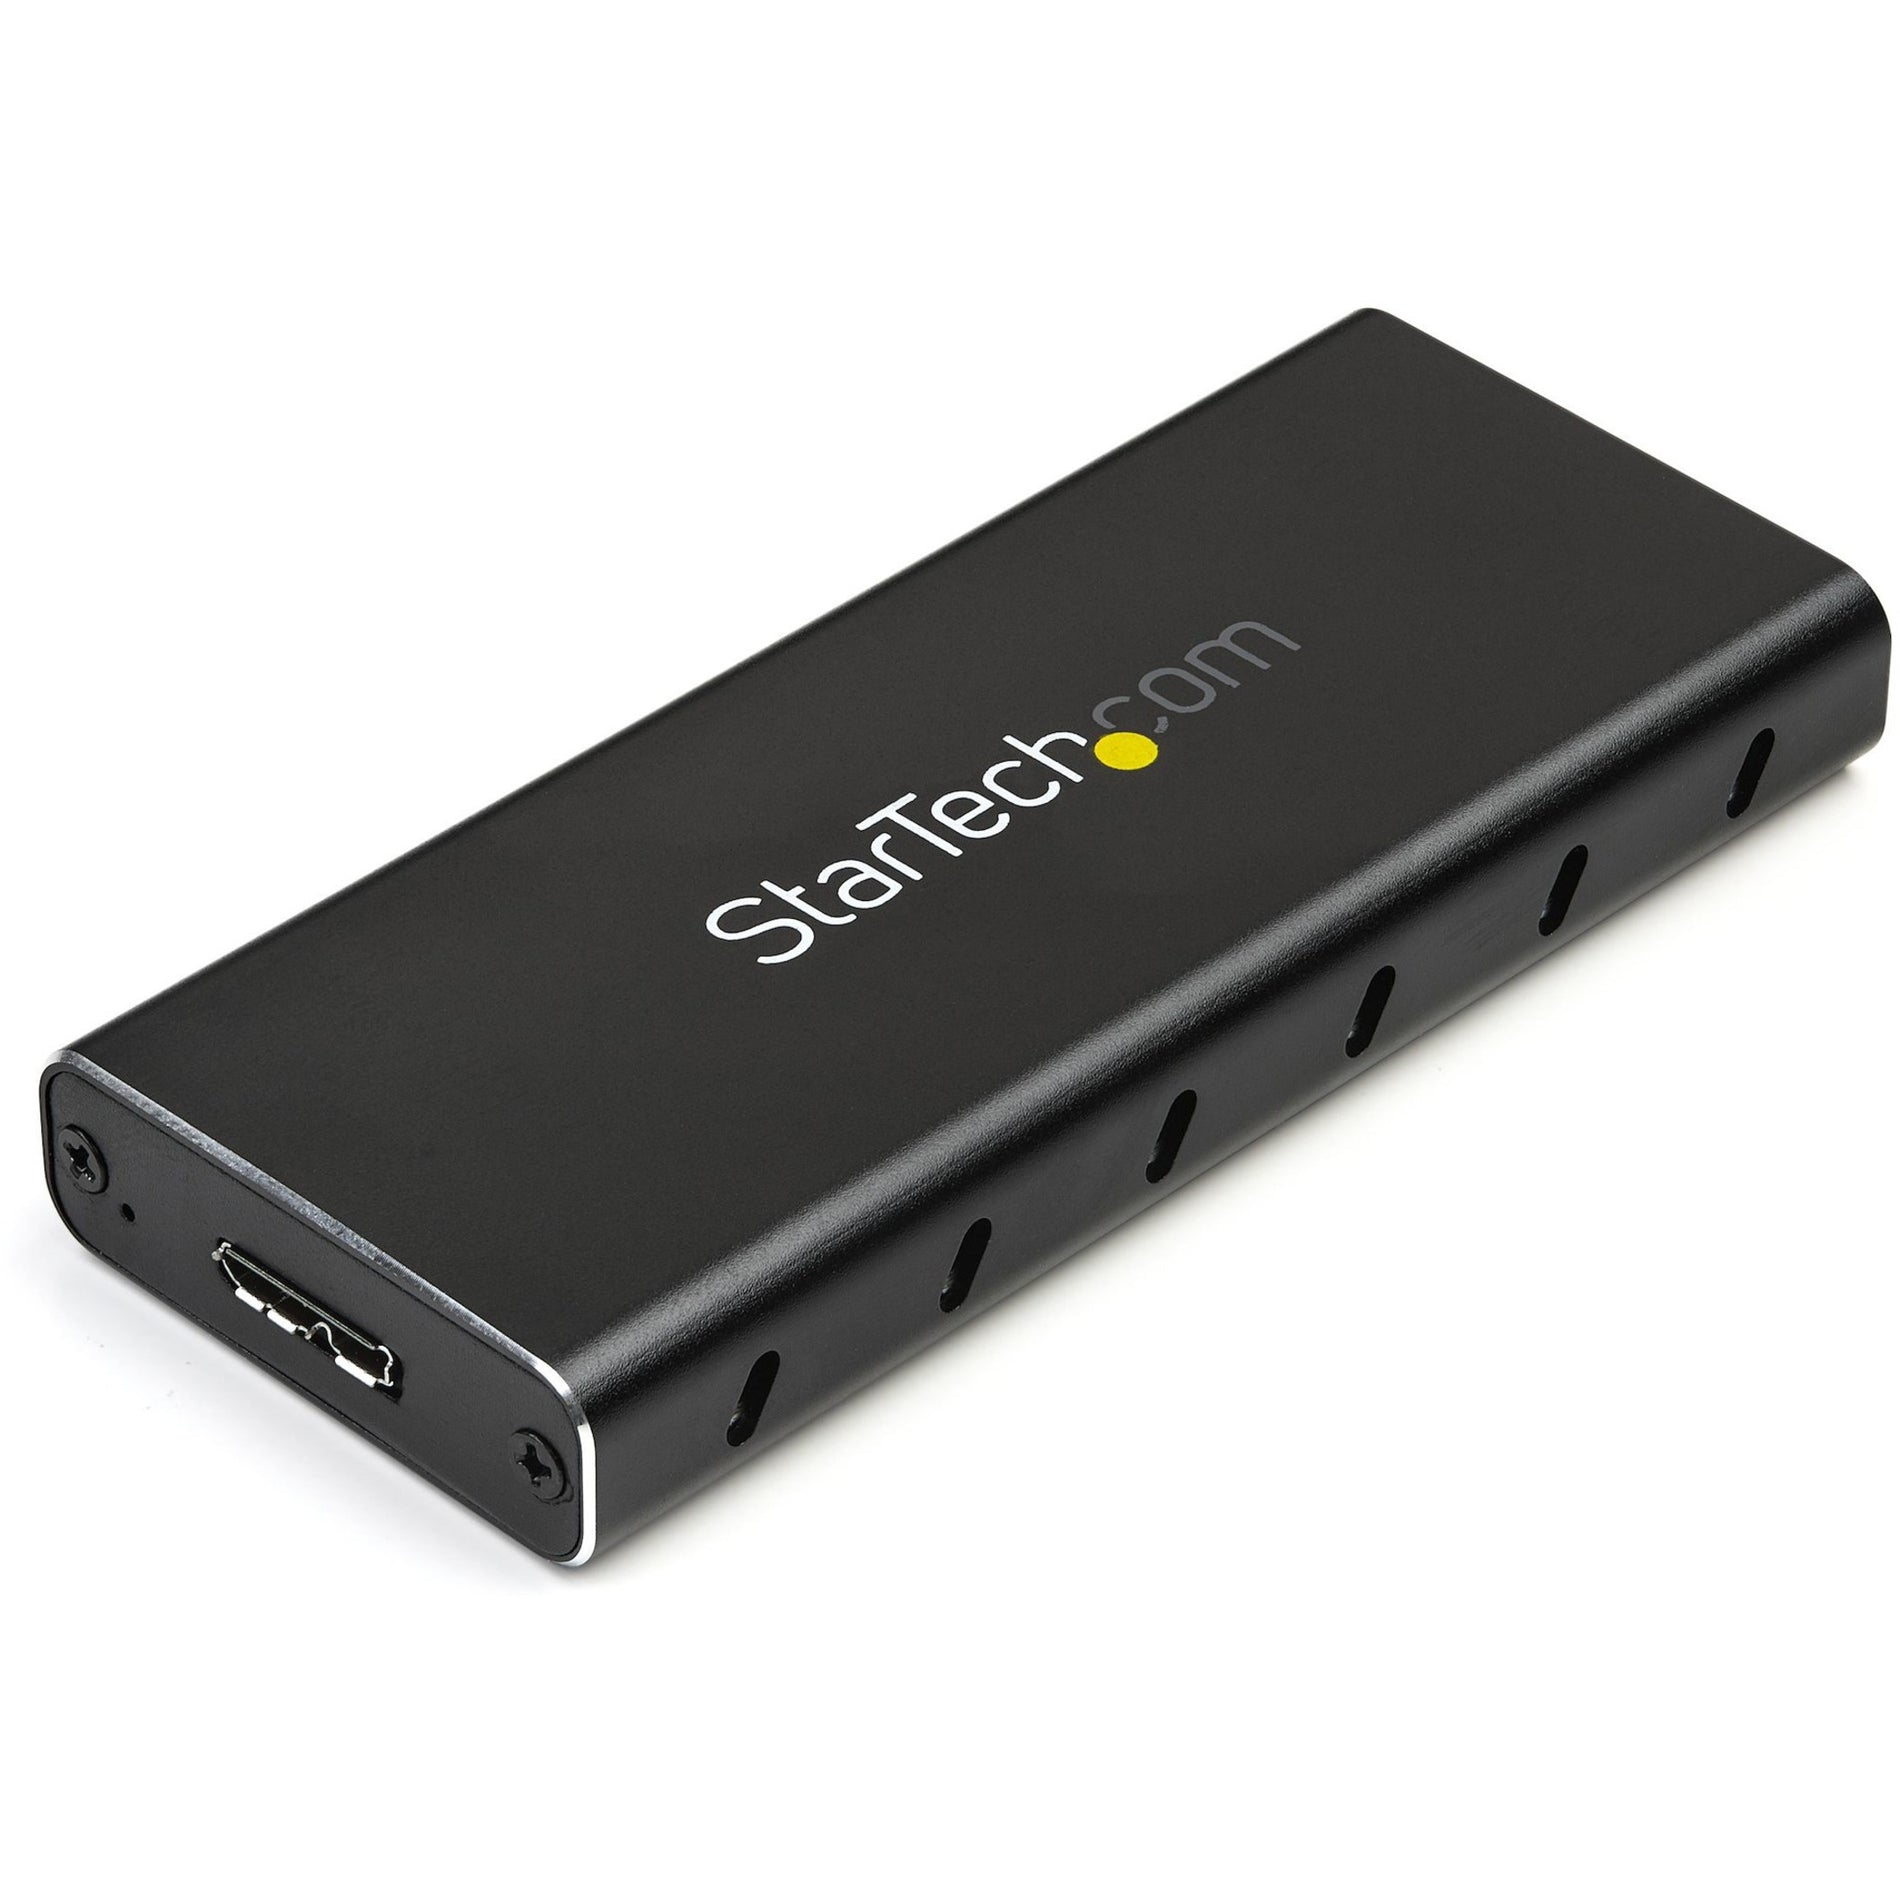 StarTech.com SM21BMU31C3 M.2 NGFF SATA Enclosure - USB 3.1, Portable Aluminum SSD Enclosure with USB C Cable